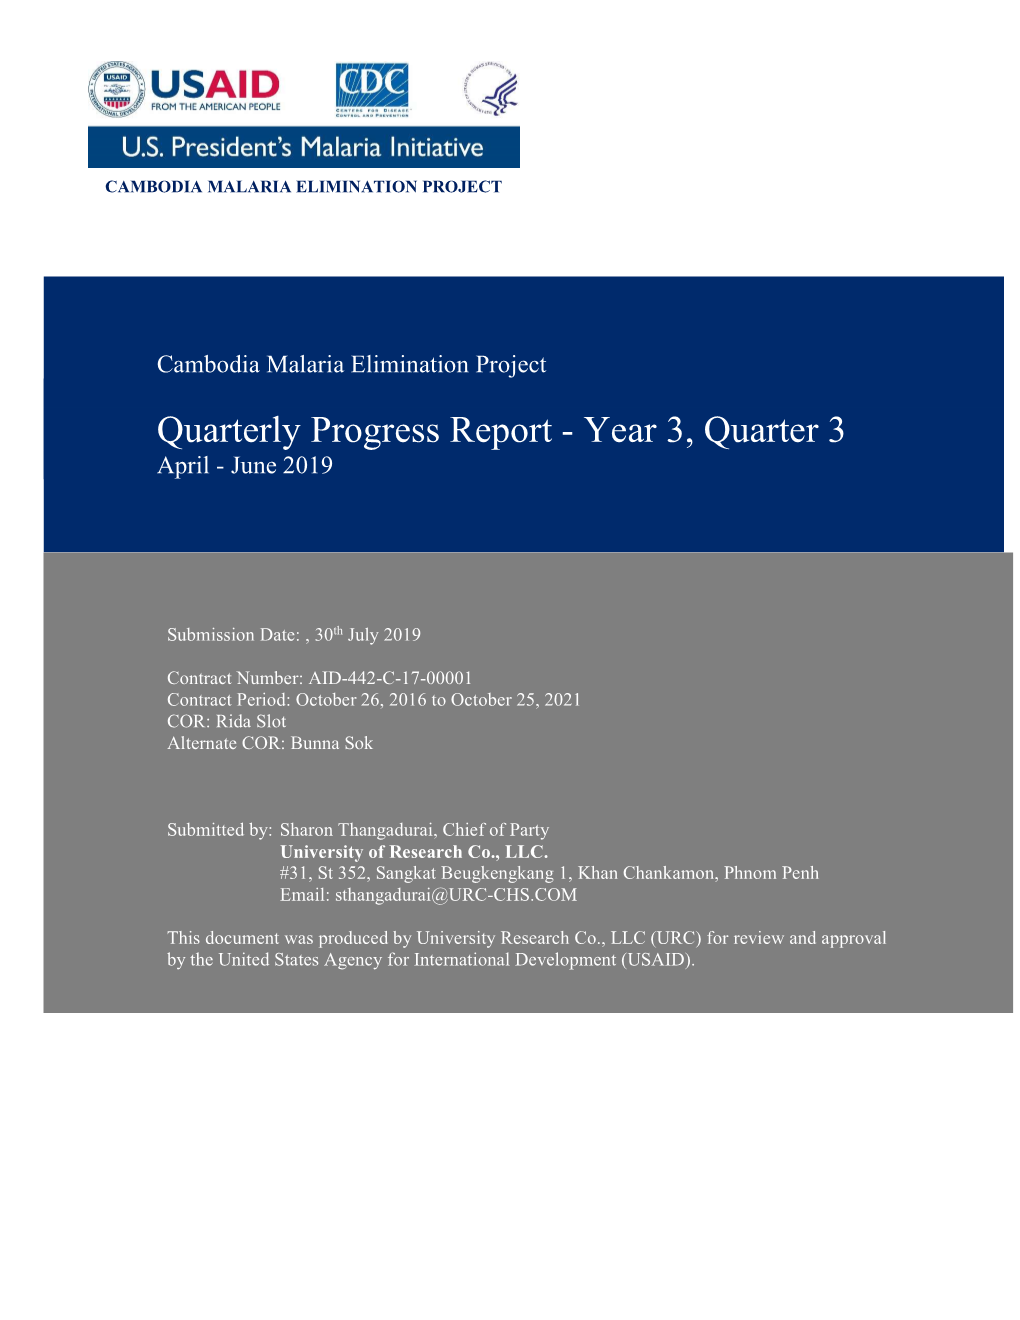 Quarterly Progress Report - Year 3, Quarter 3 April - June 2019